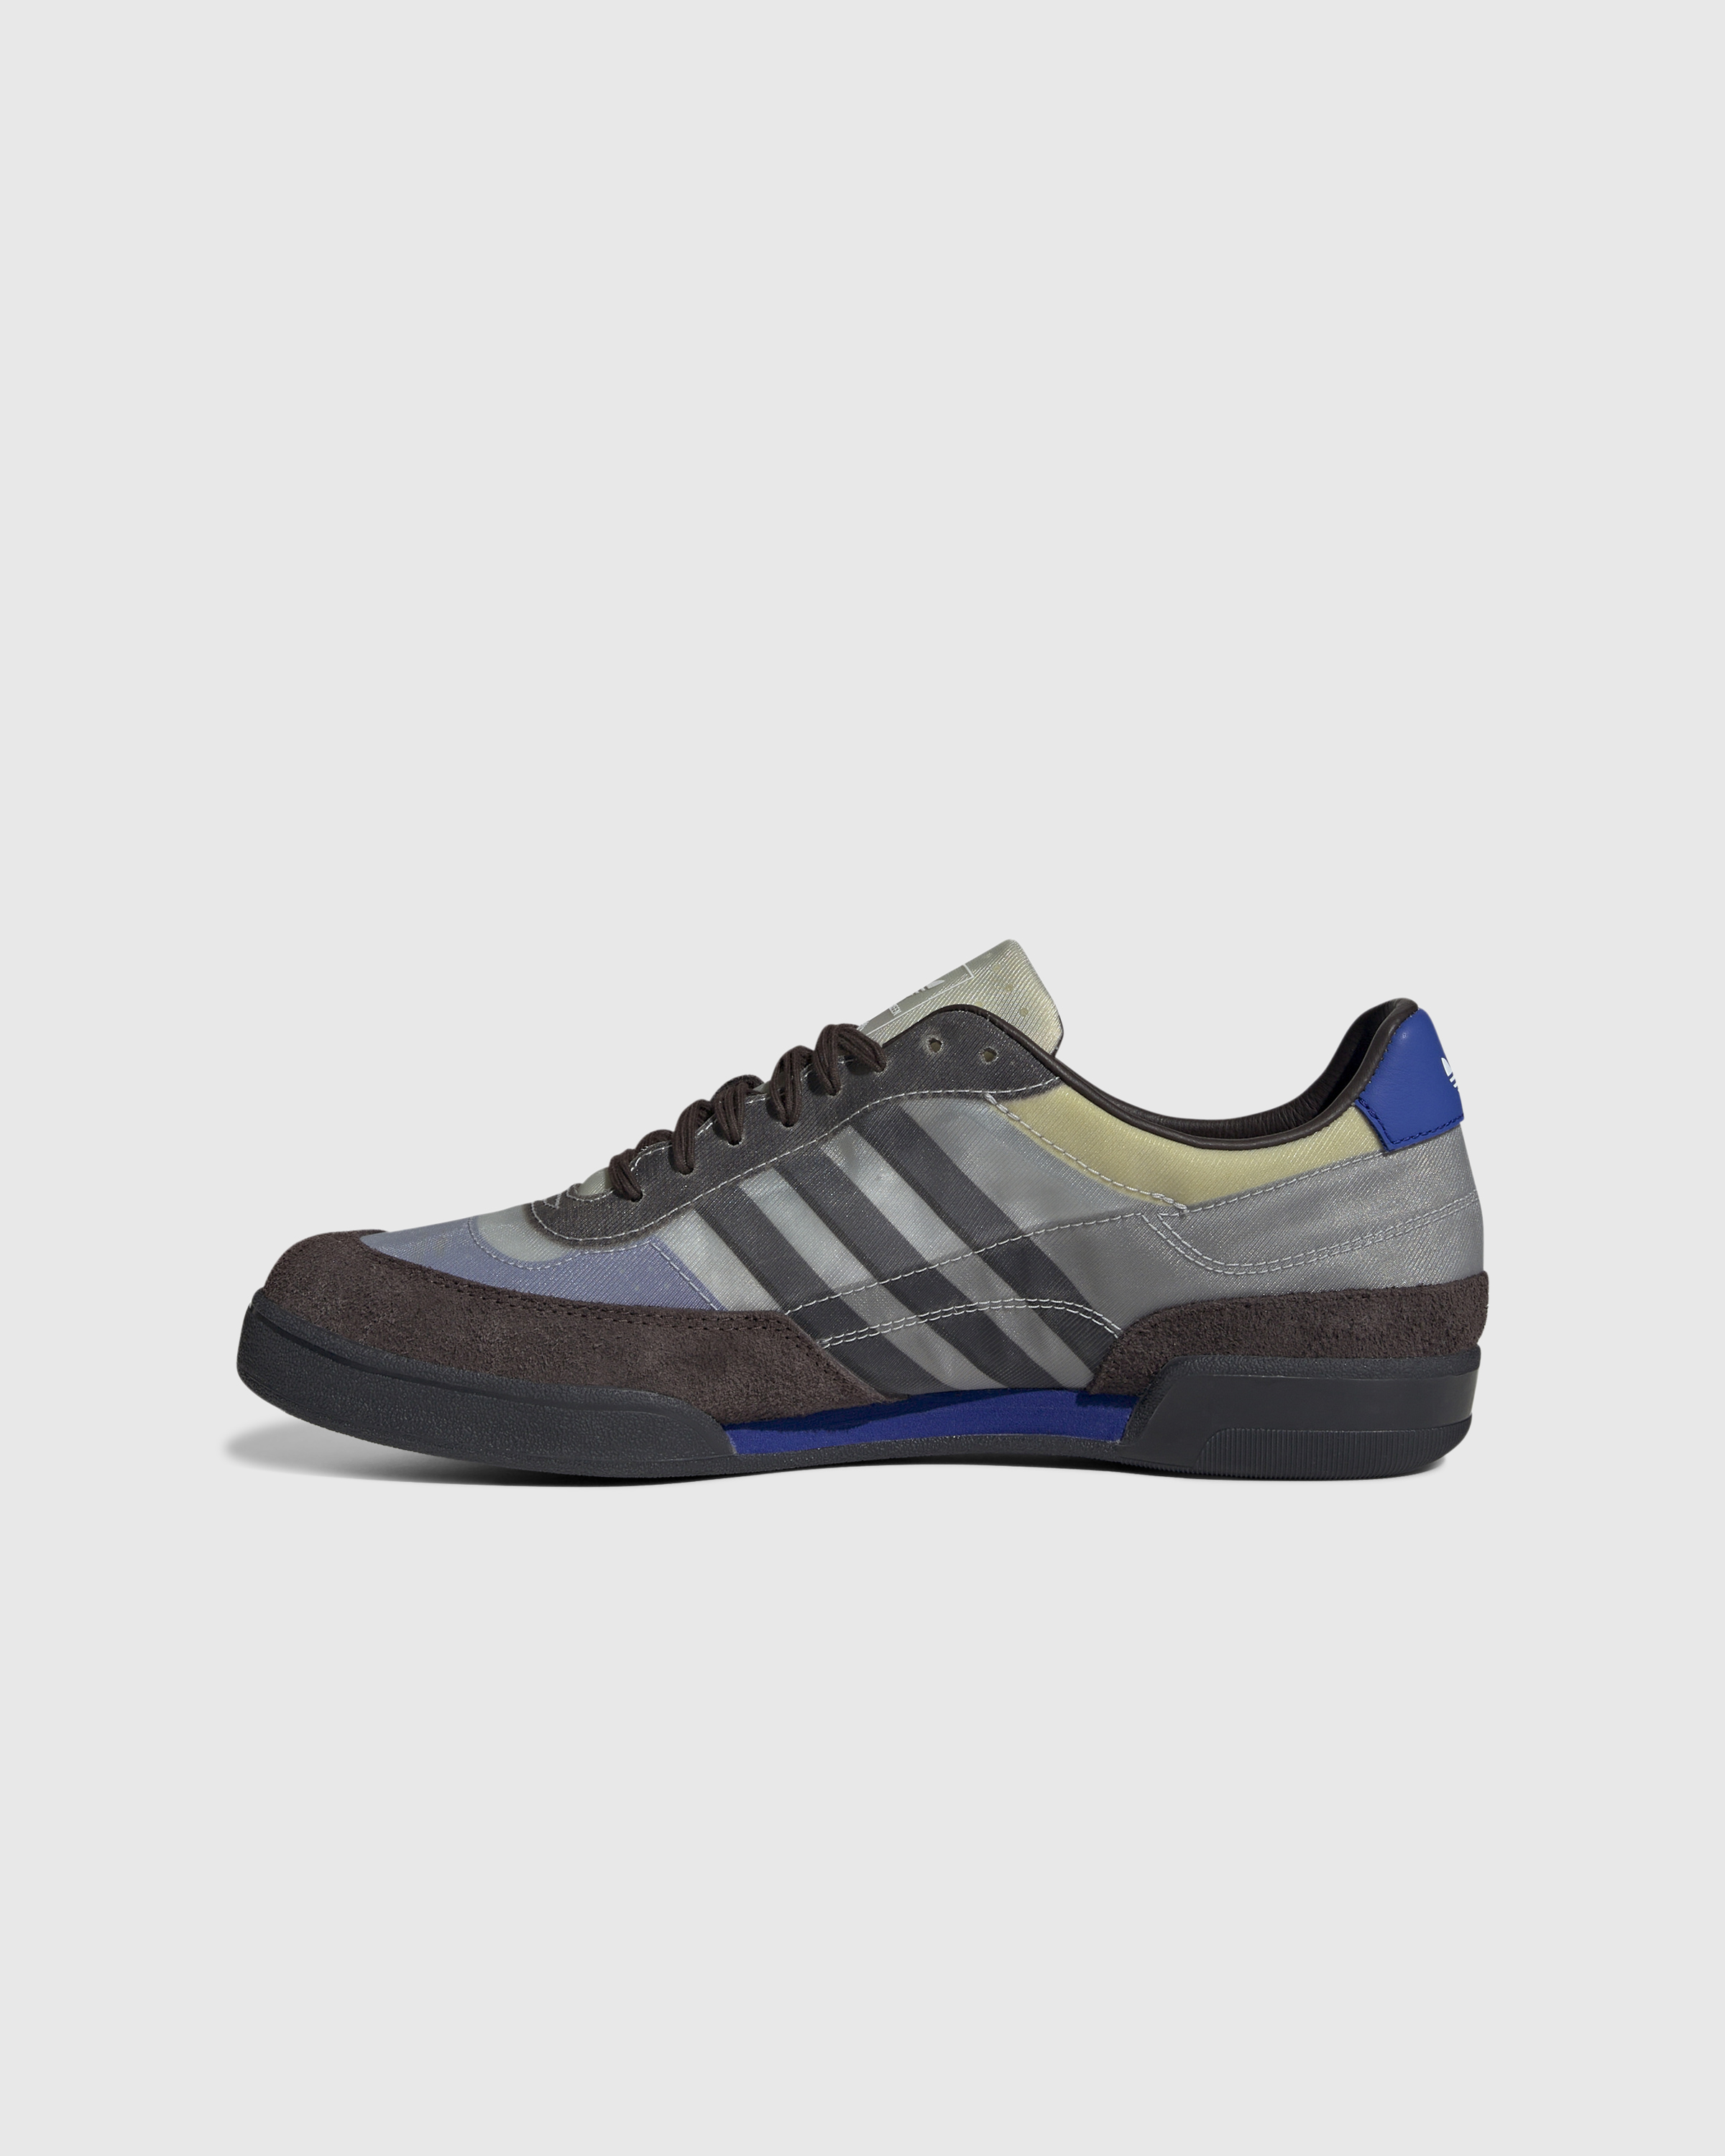 Adidas x Craig Green – Squash Polta Akh Multi/Core White/Gum - Low Top Sneakers - Multi - Image 2